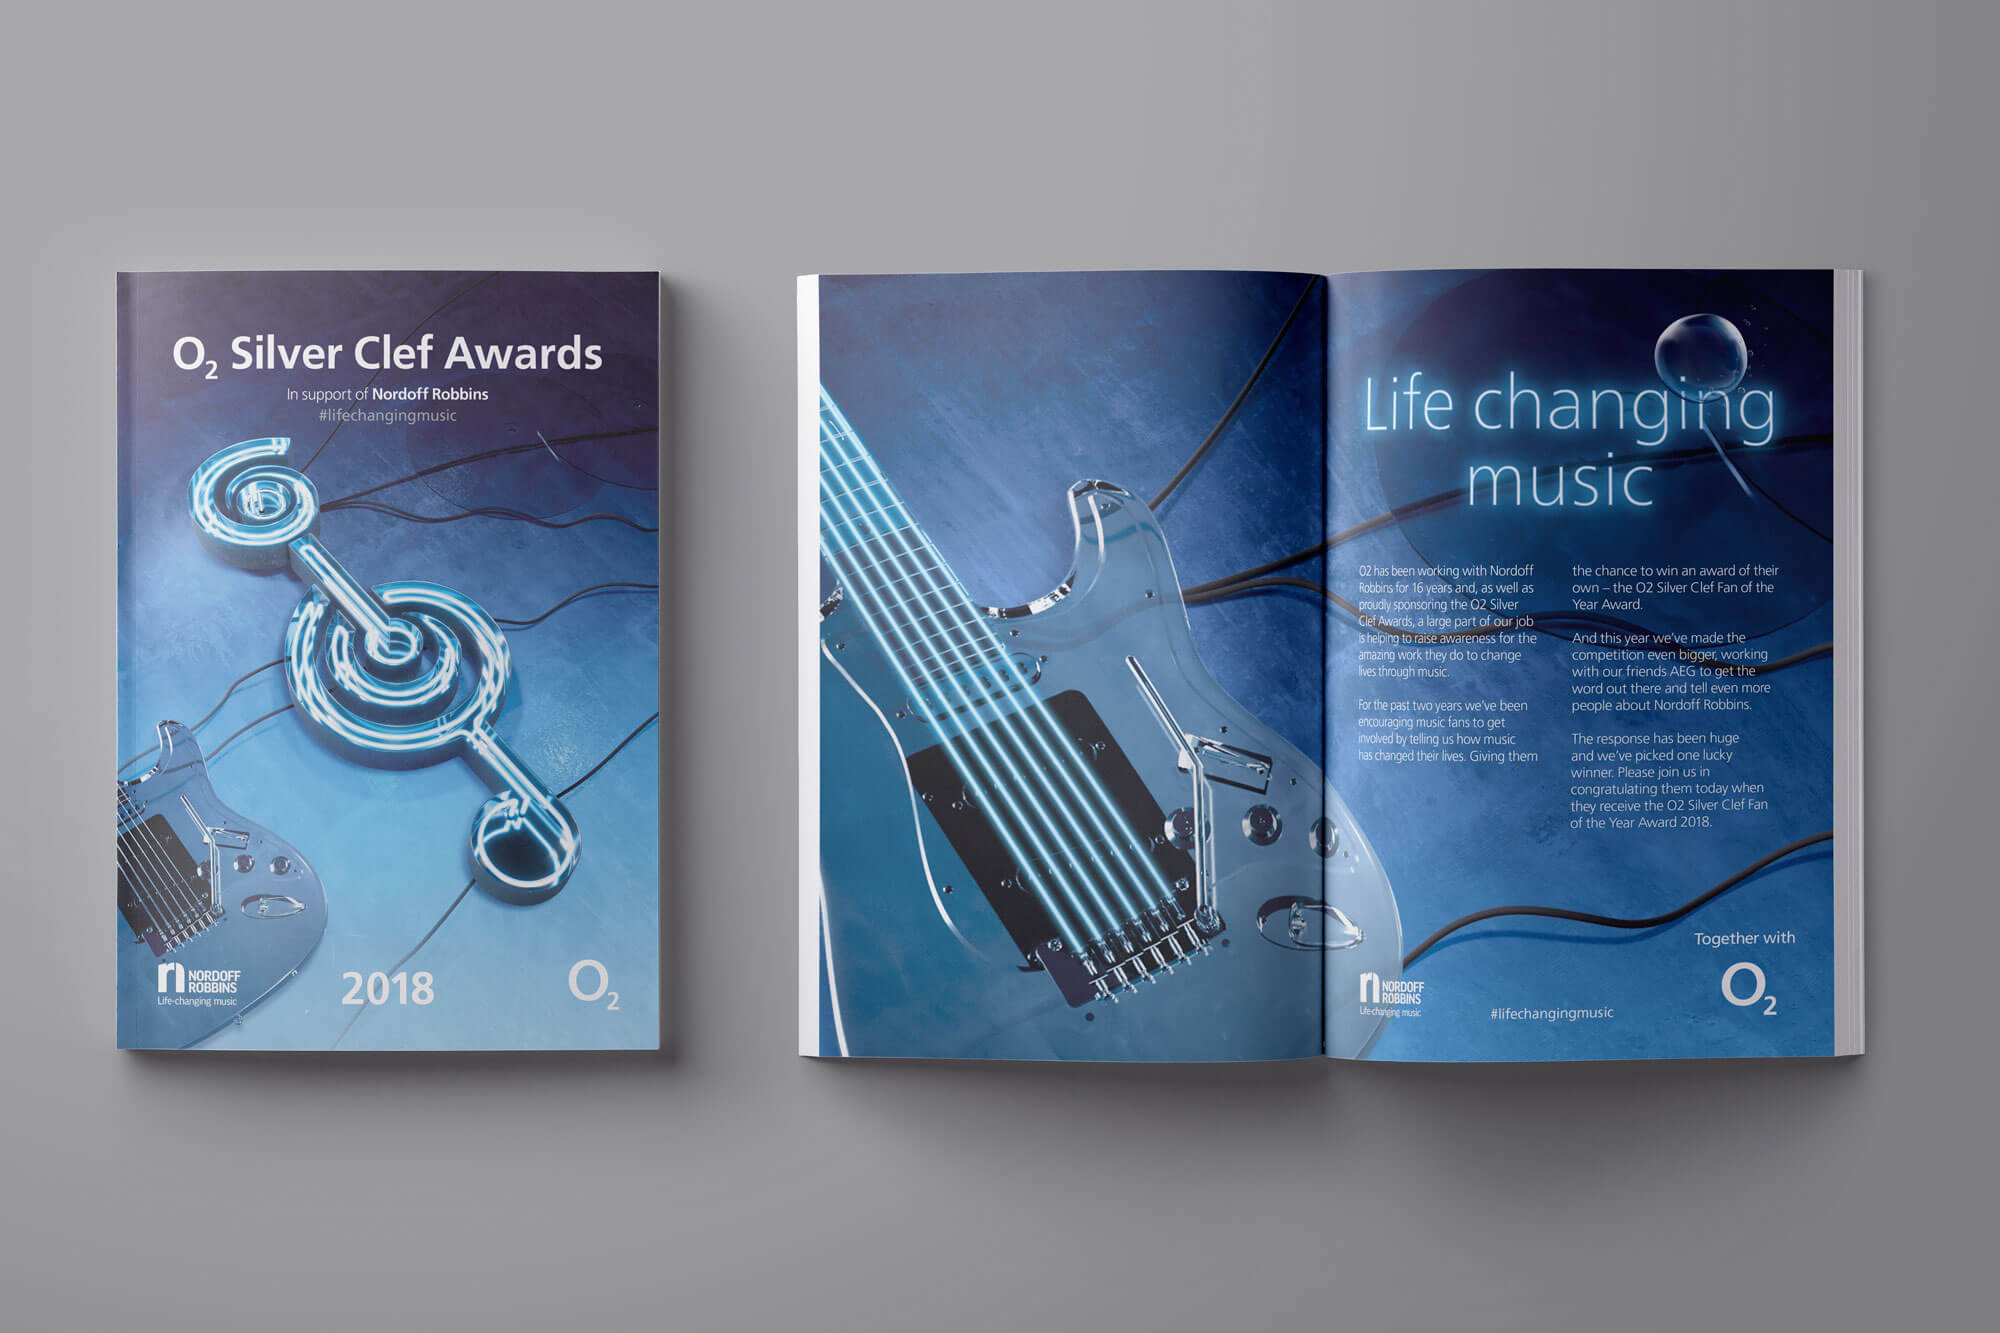 gpj-studio-o2-silver-clef-awards-brand-refresh-cs-07